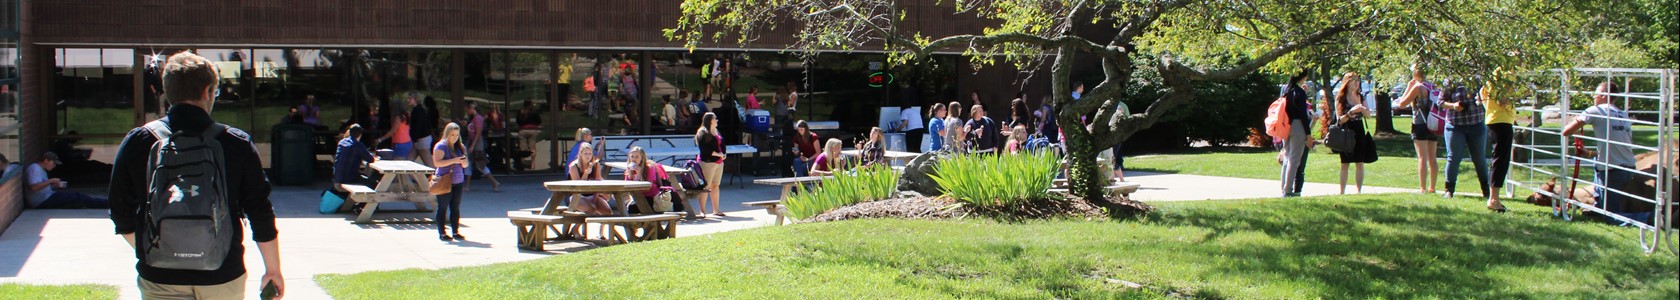 Students enjoy MCC's Sidney campus picnic area